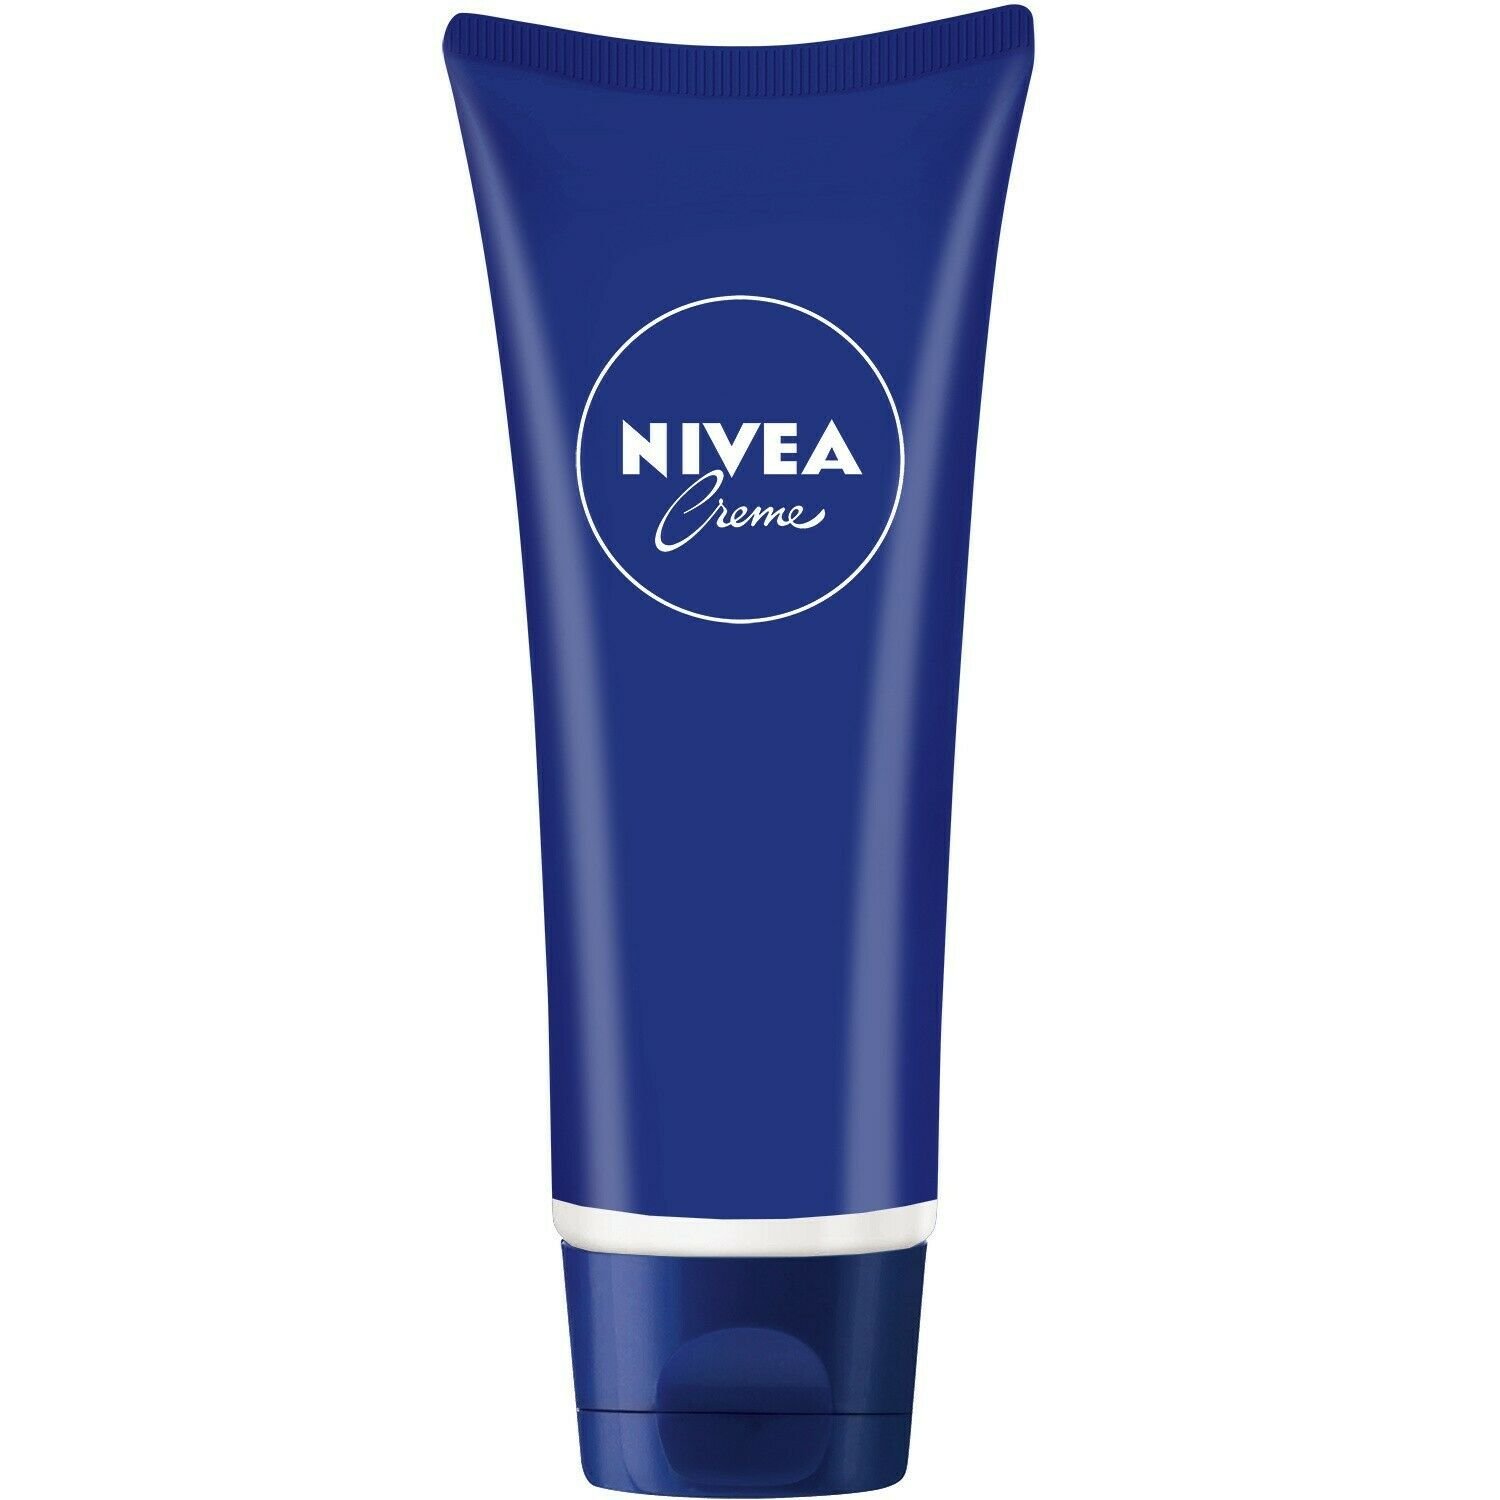 lot 3 Cream for all skin types NIVEA tube 100 ml